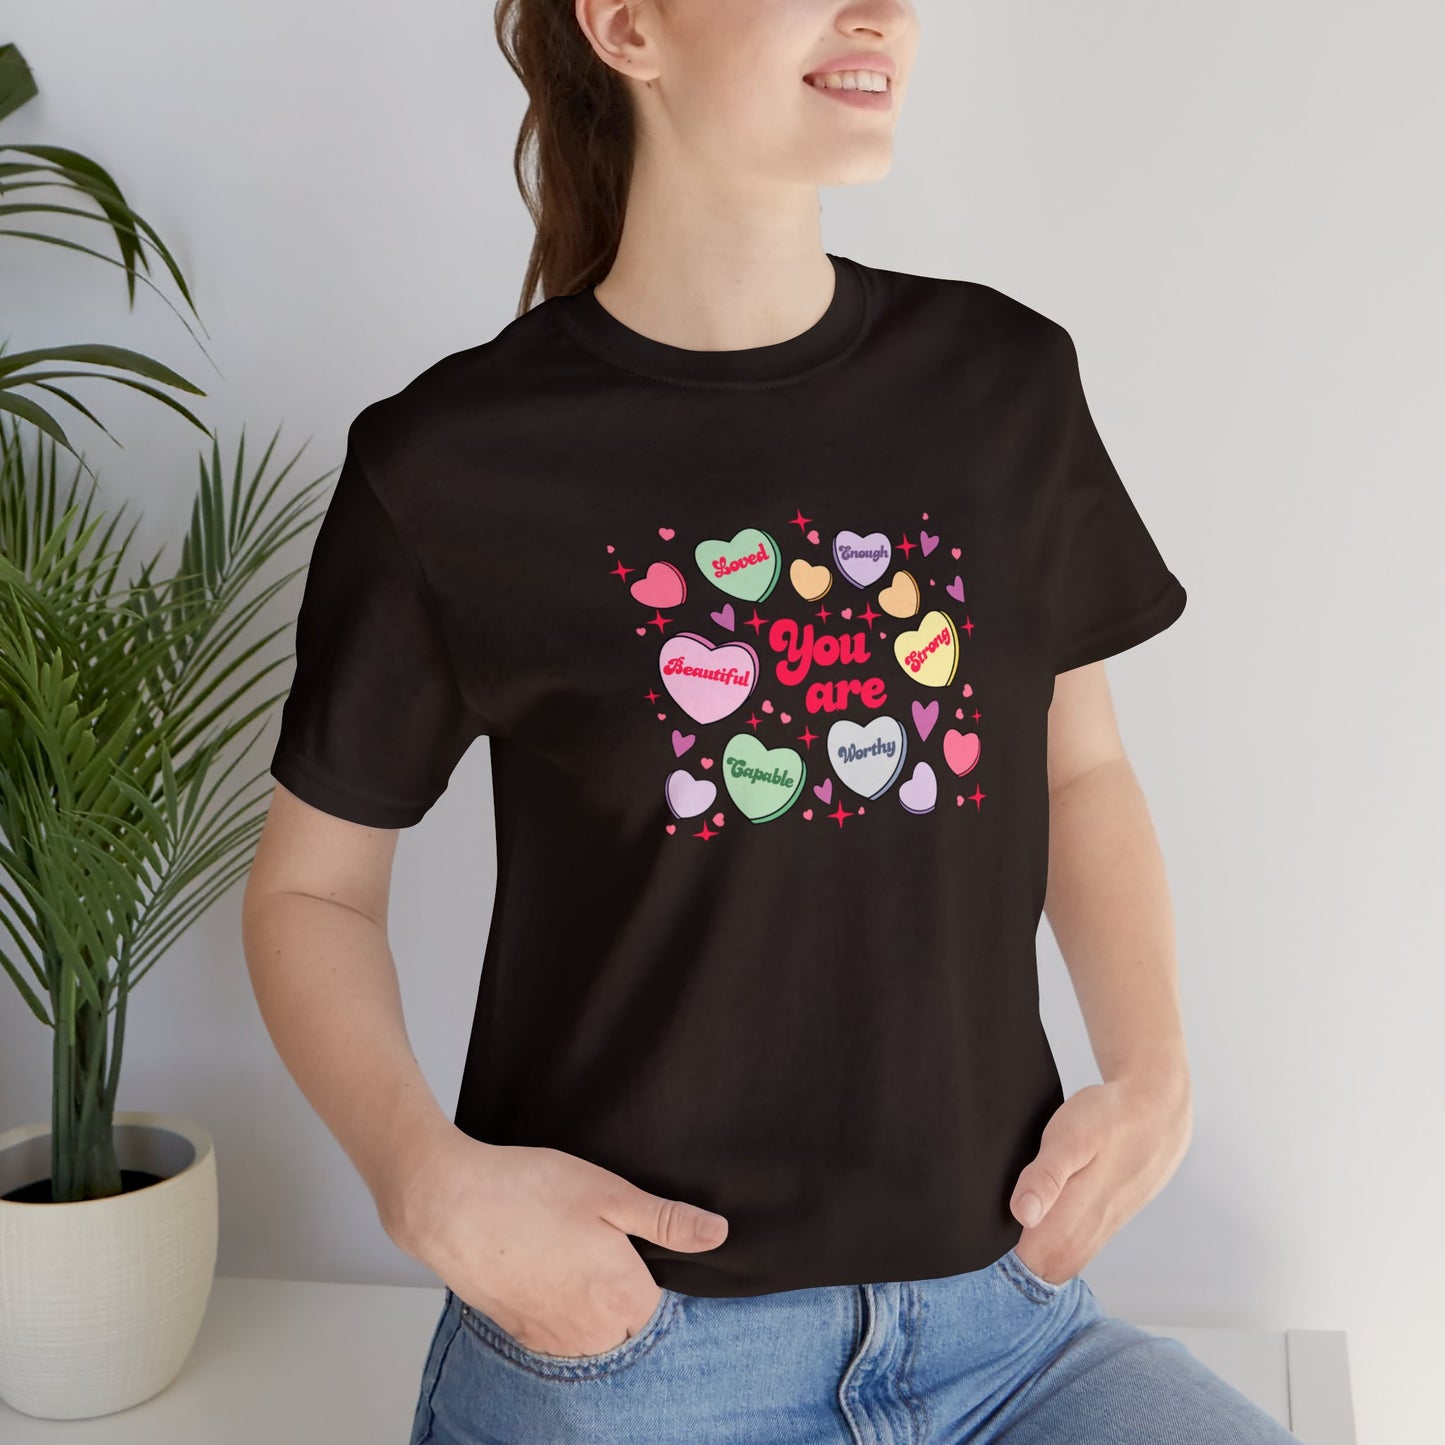 Conversation Hearts Shirt